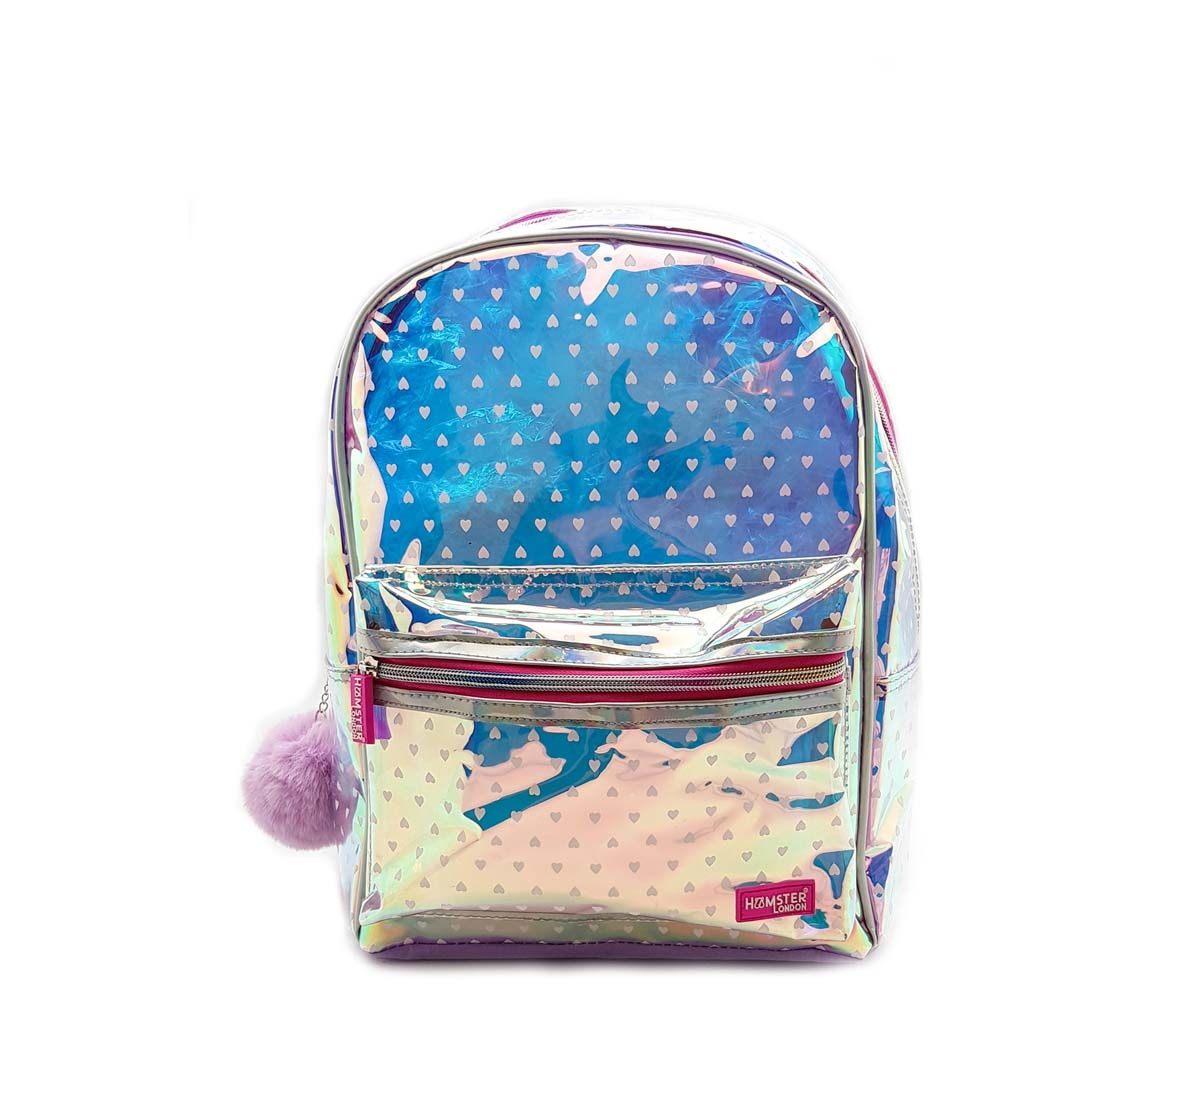 Buy HAMSTER LONDON Shiny Boston Bag, Handbag For Womens, Girls (Purple,  Size: 32X12X25 cm) at Amazon.in